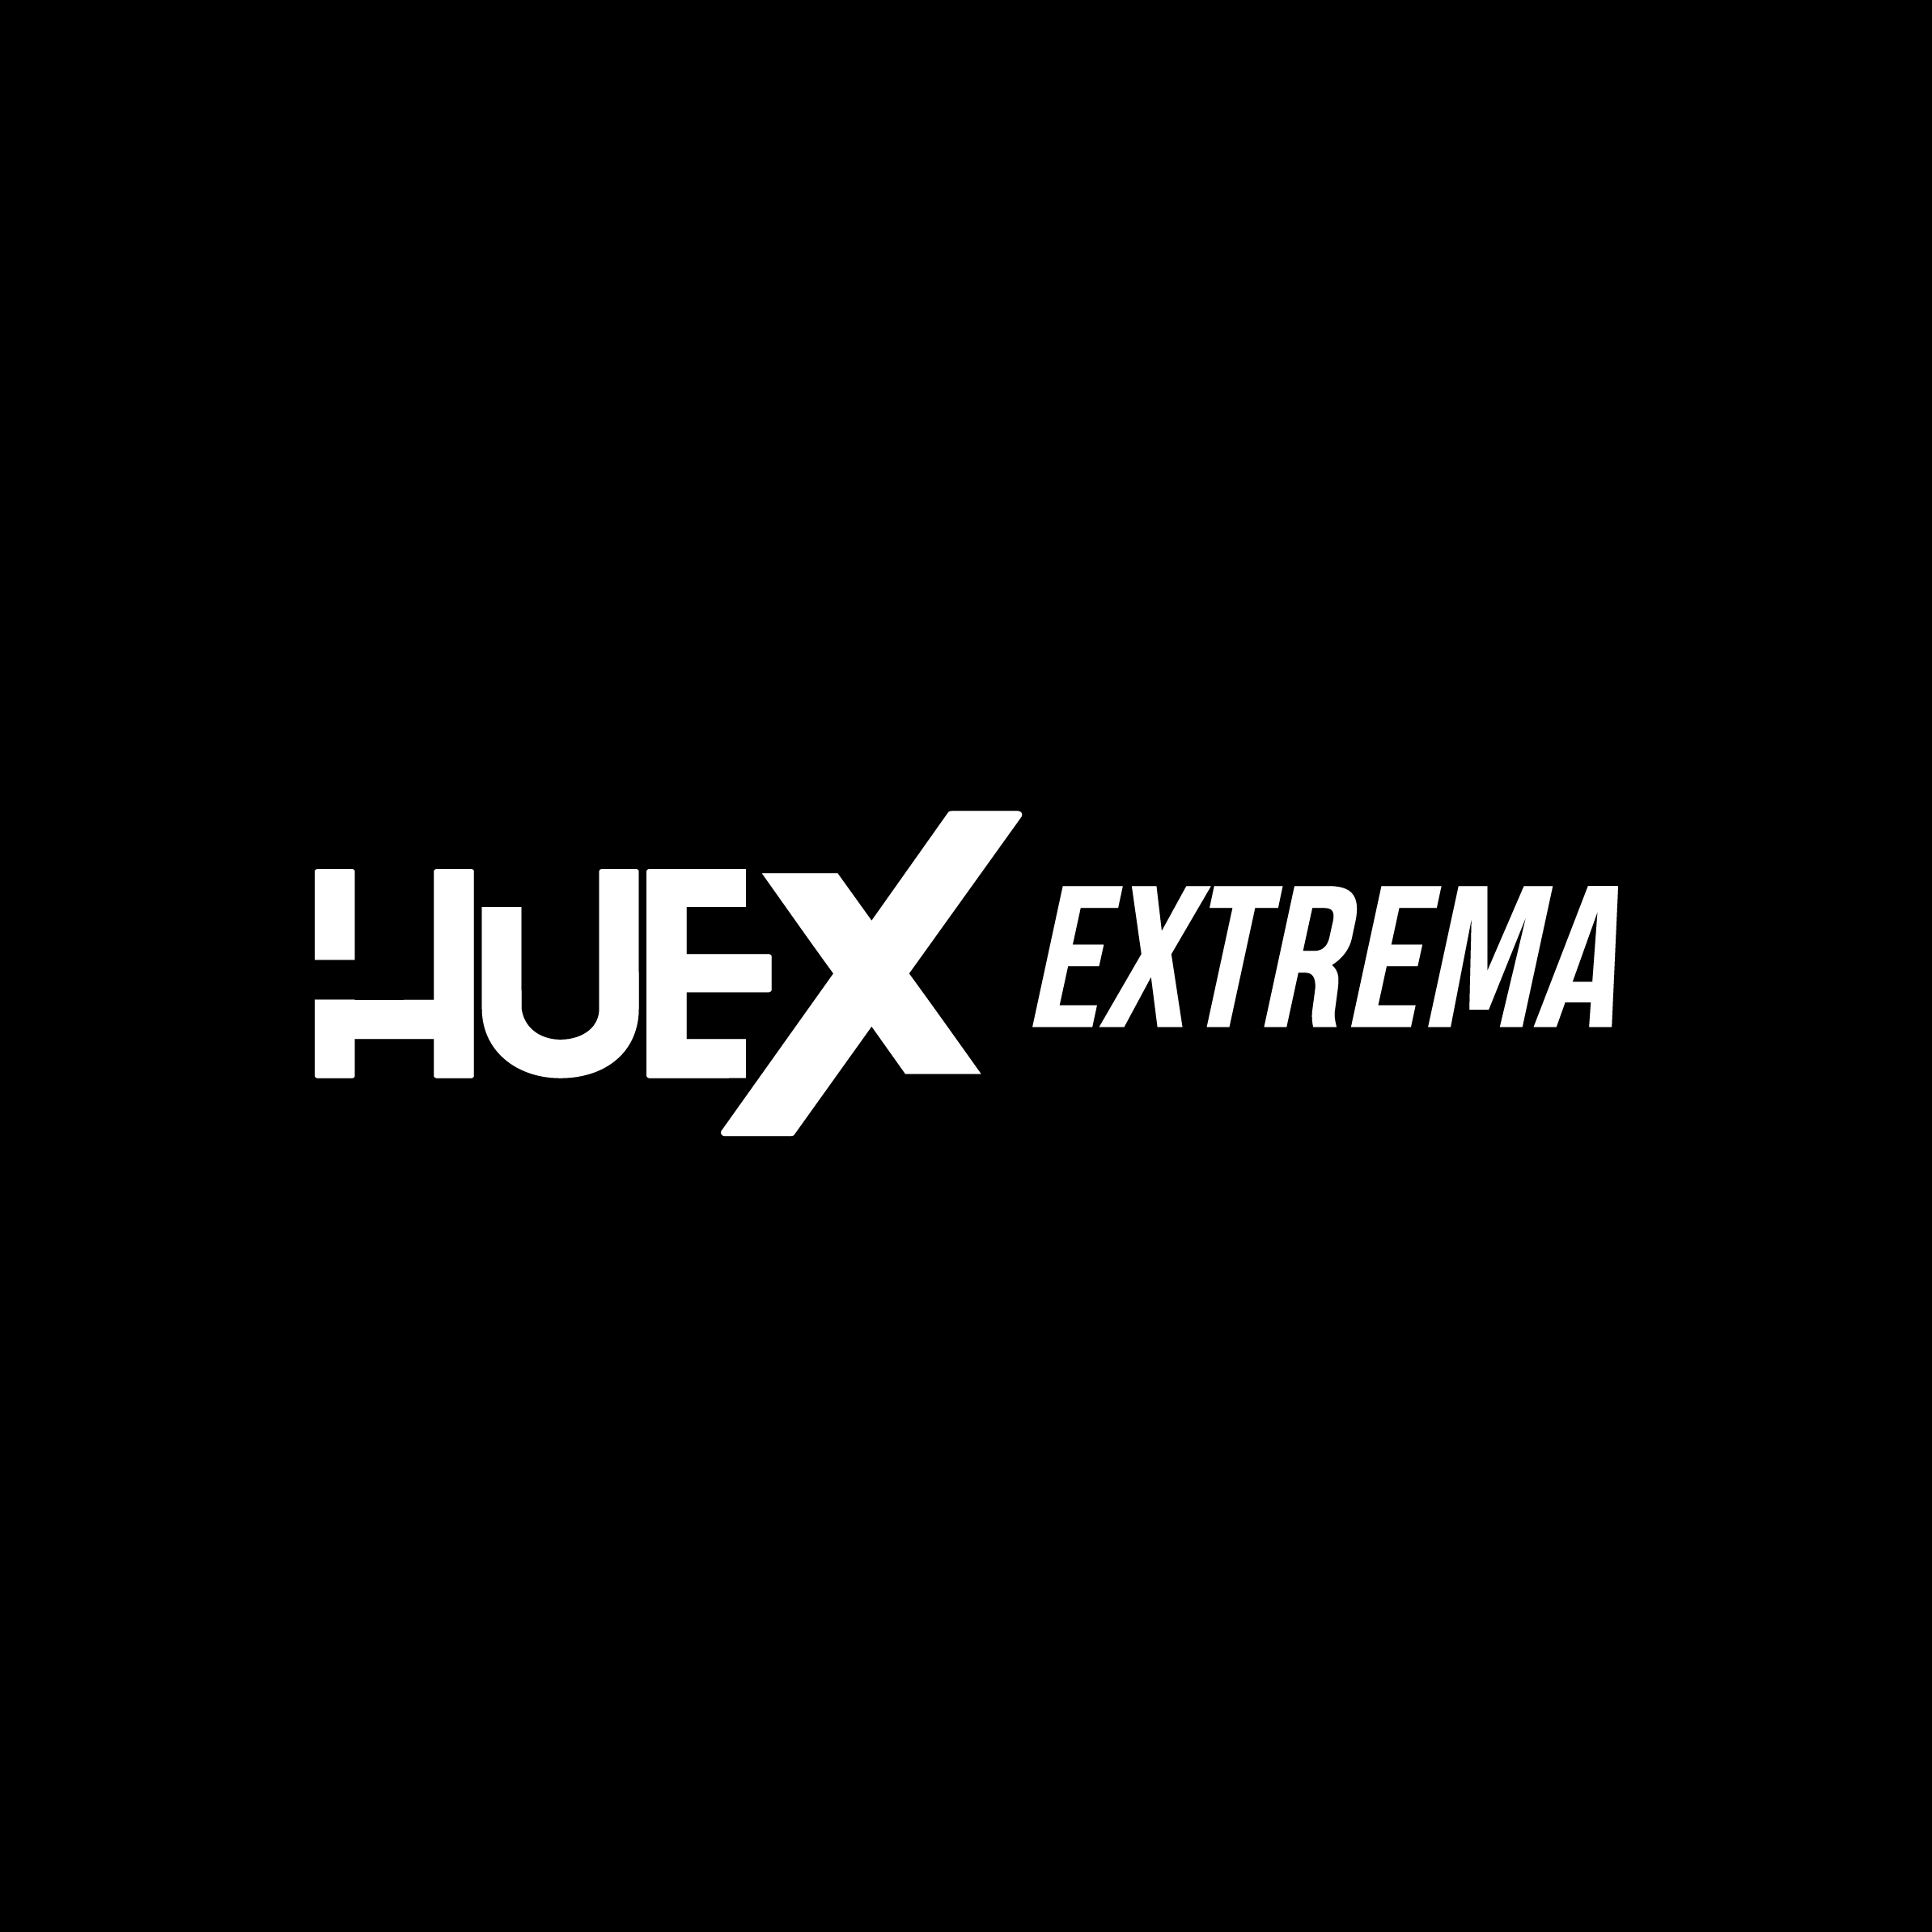 HUEX Extrema